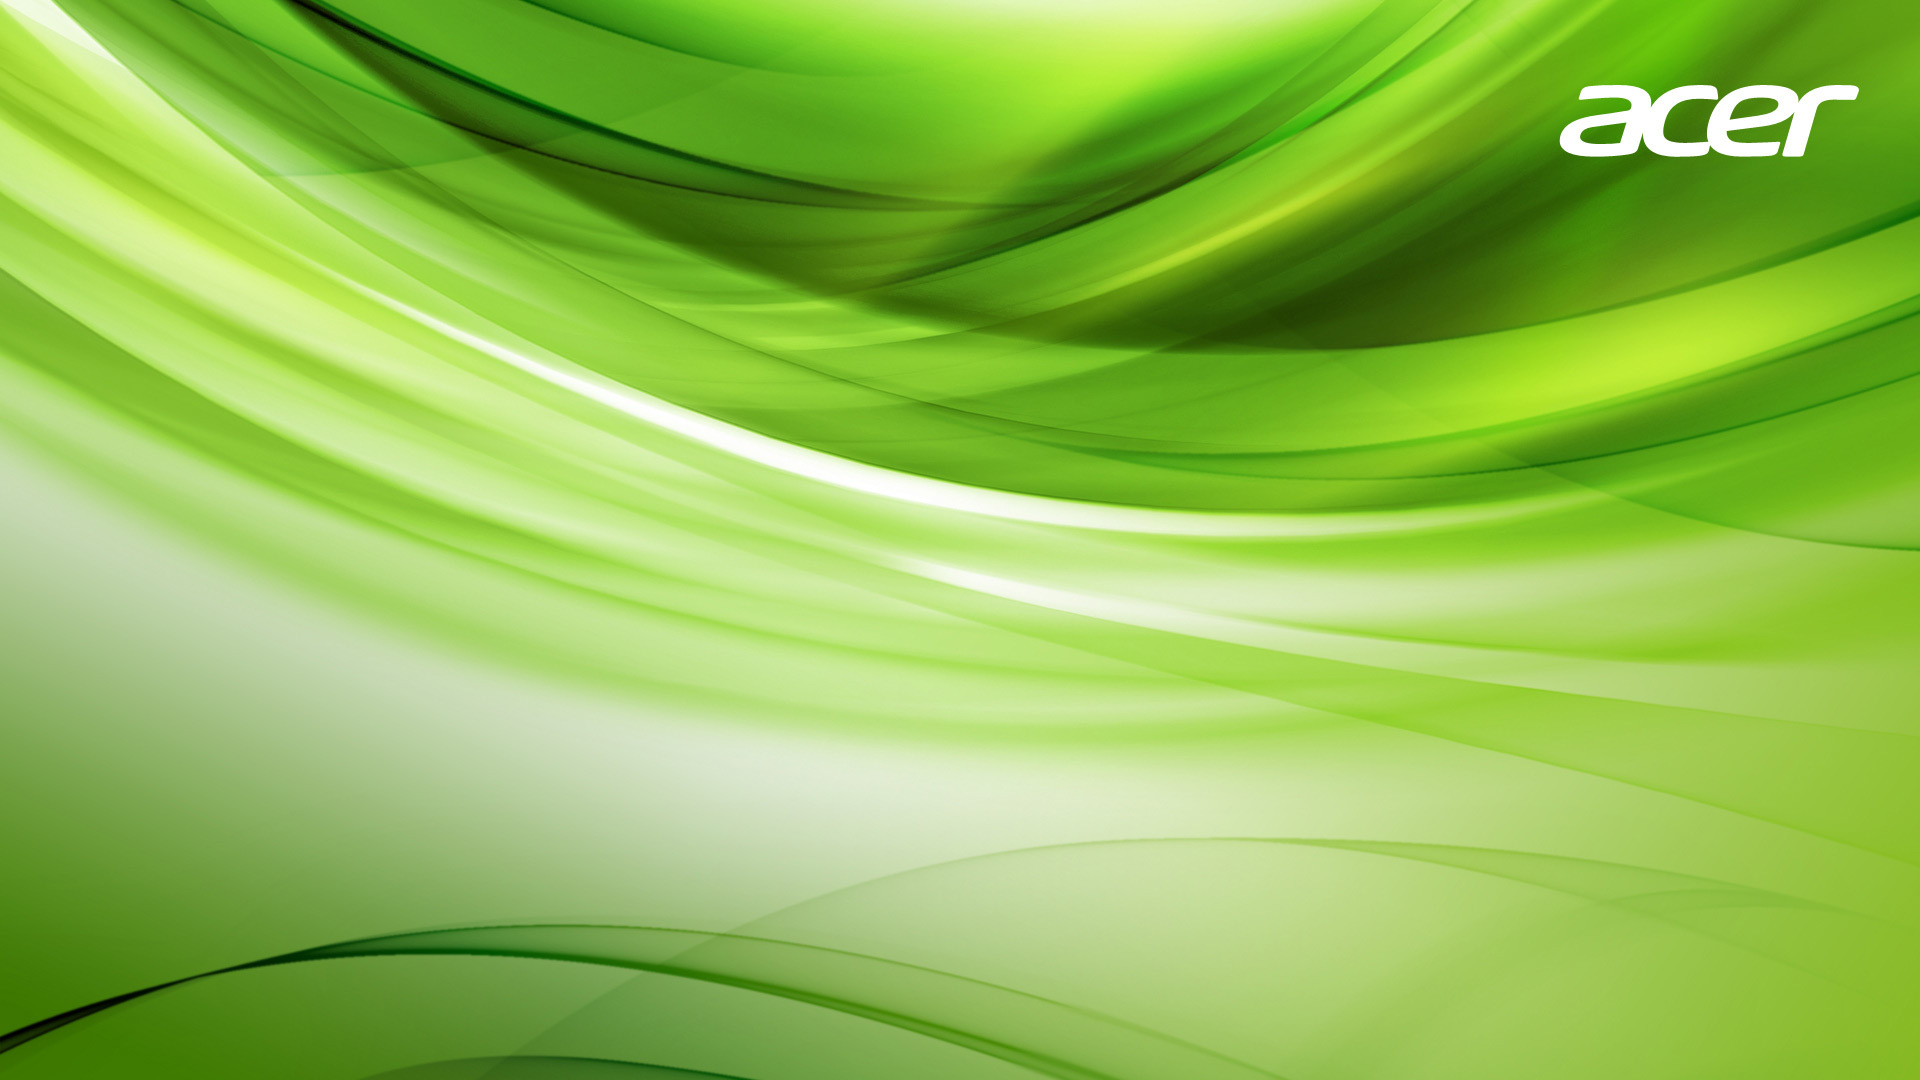 Acer Desktop Green Wallpaper